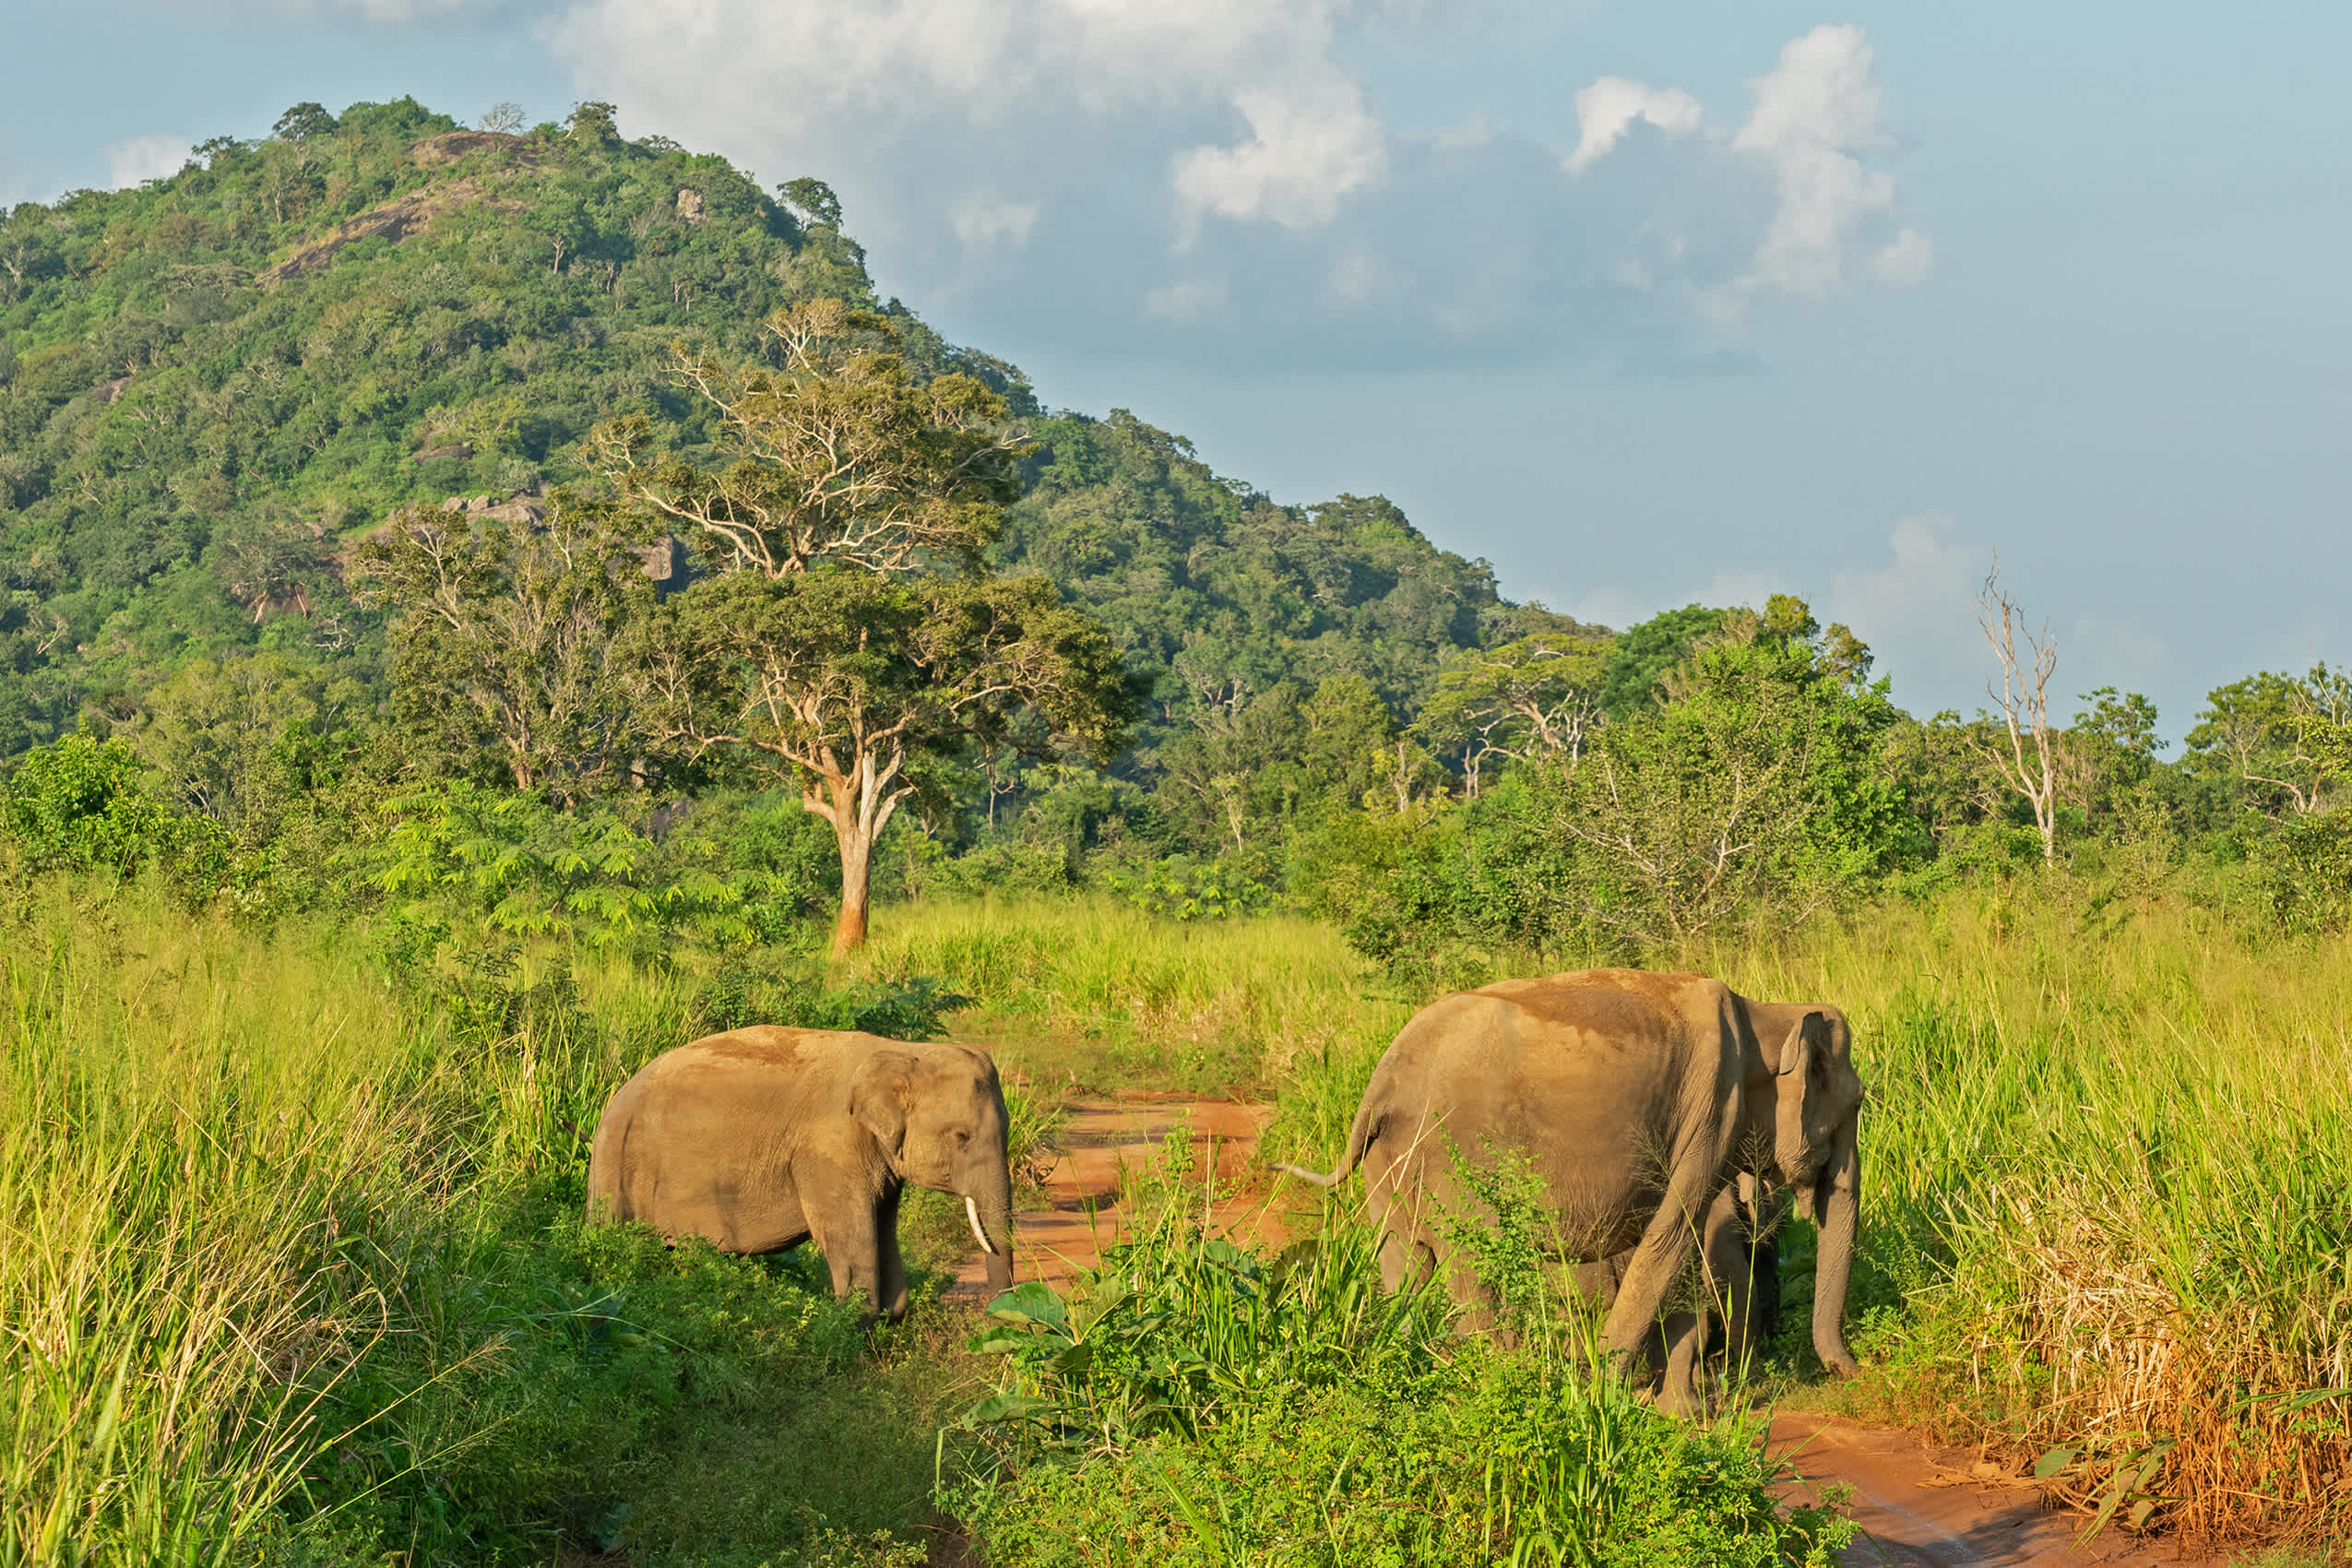 Elefantenfamilie wilde Tiere im grünen Dschungel, Sri Lanka, Habarana Nationalpark Berglandschaft.